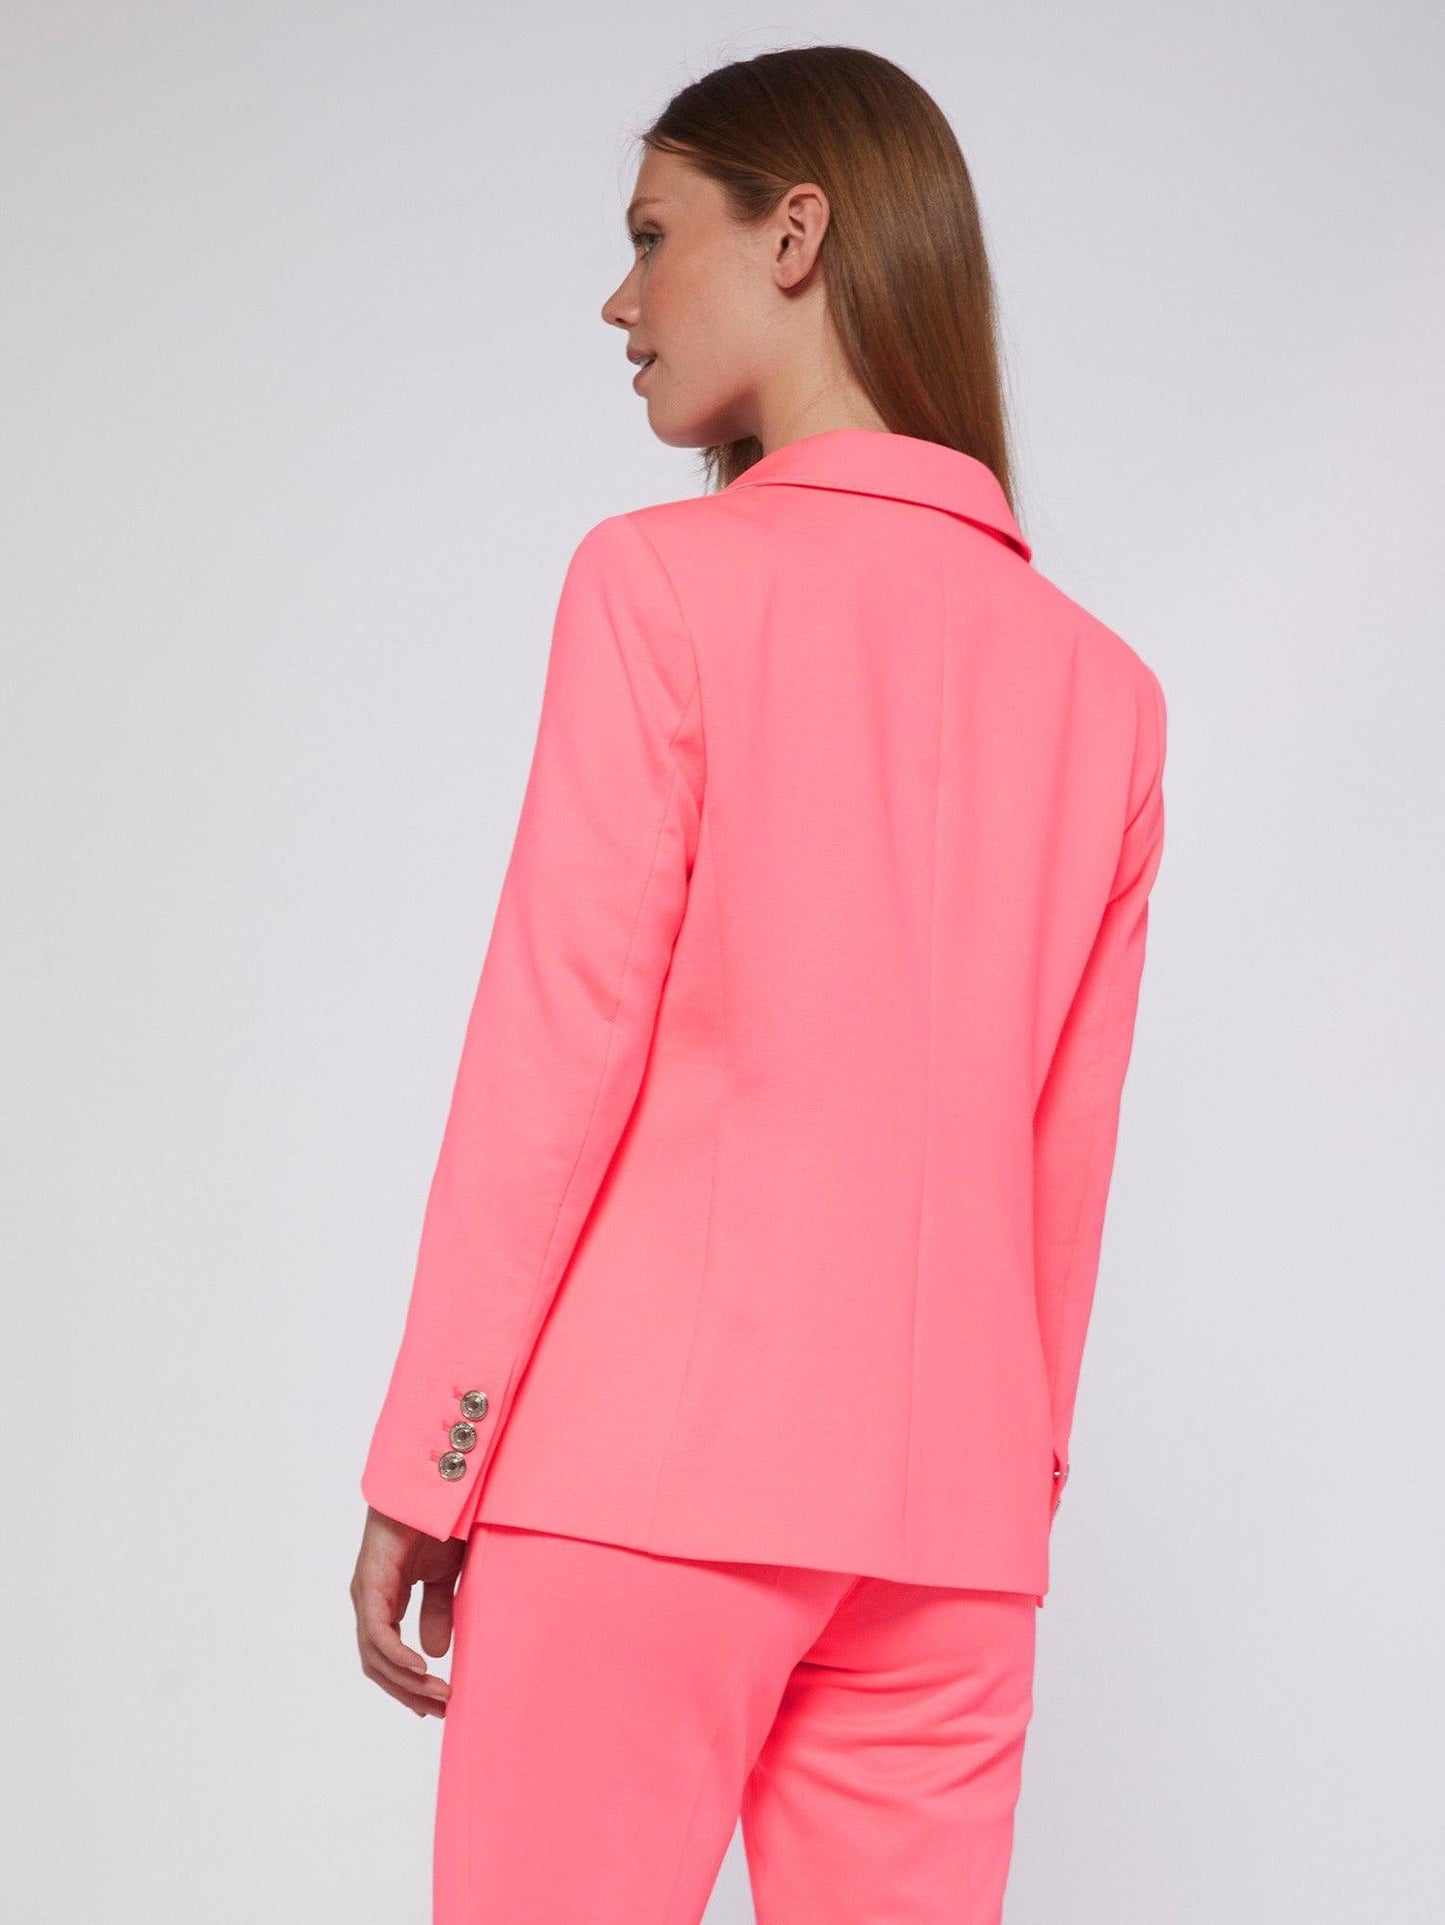 Vilagallo Fluorescent Pink Knit Jacket